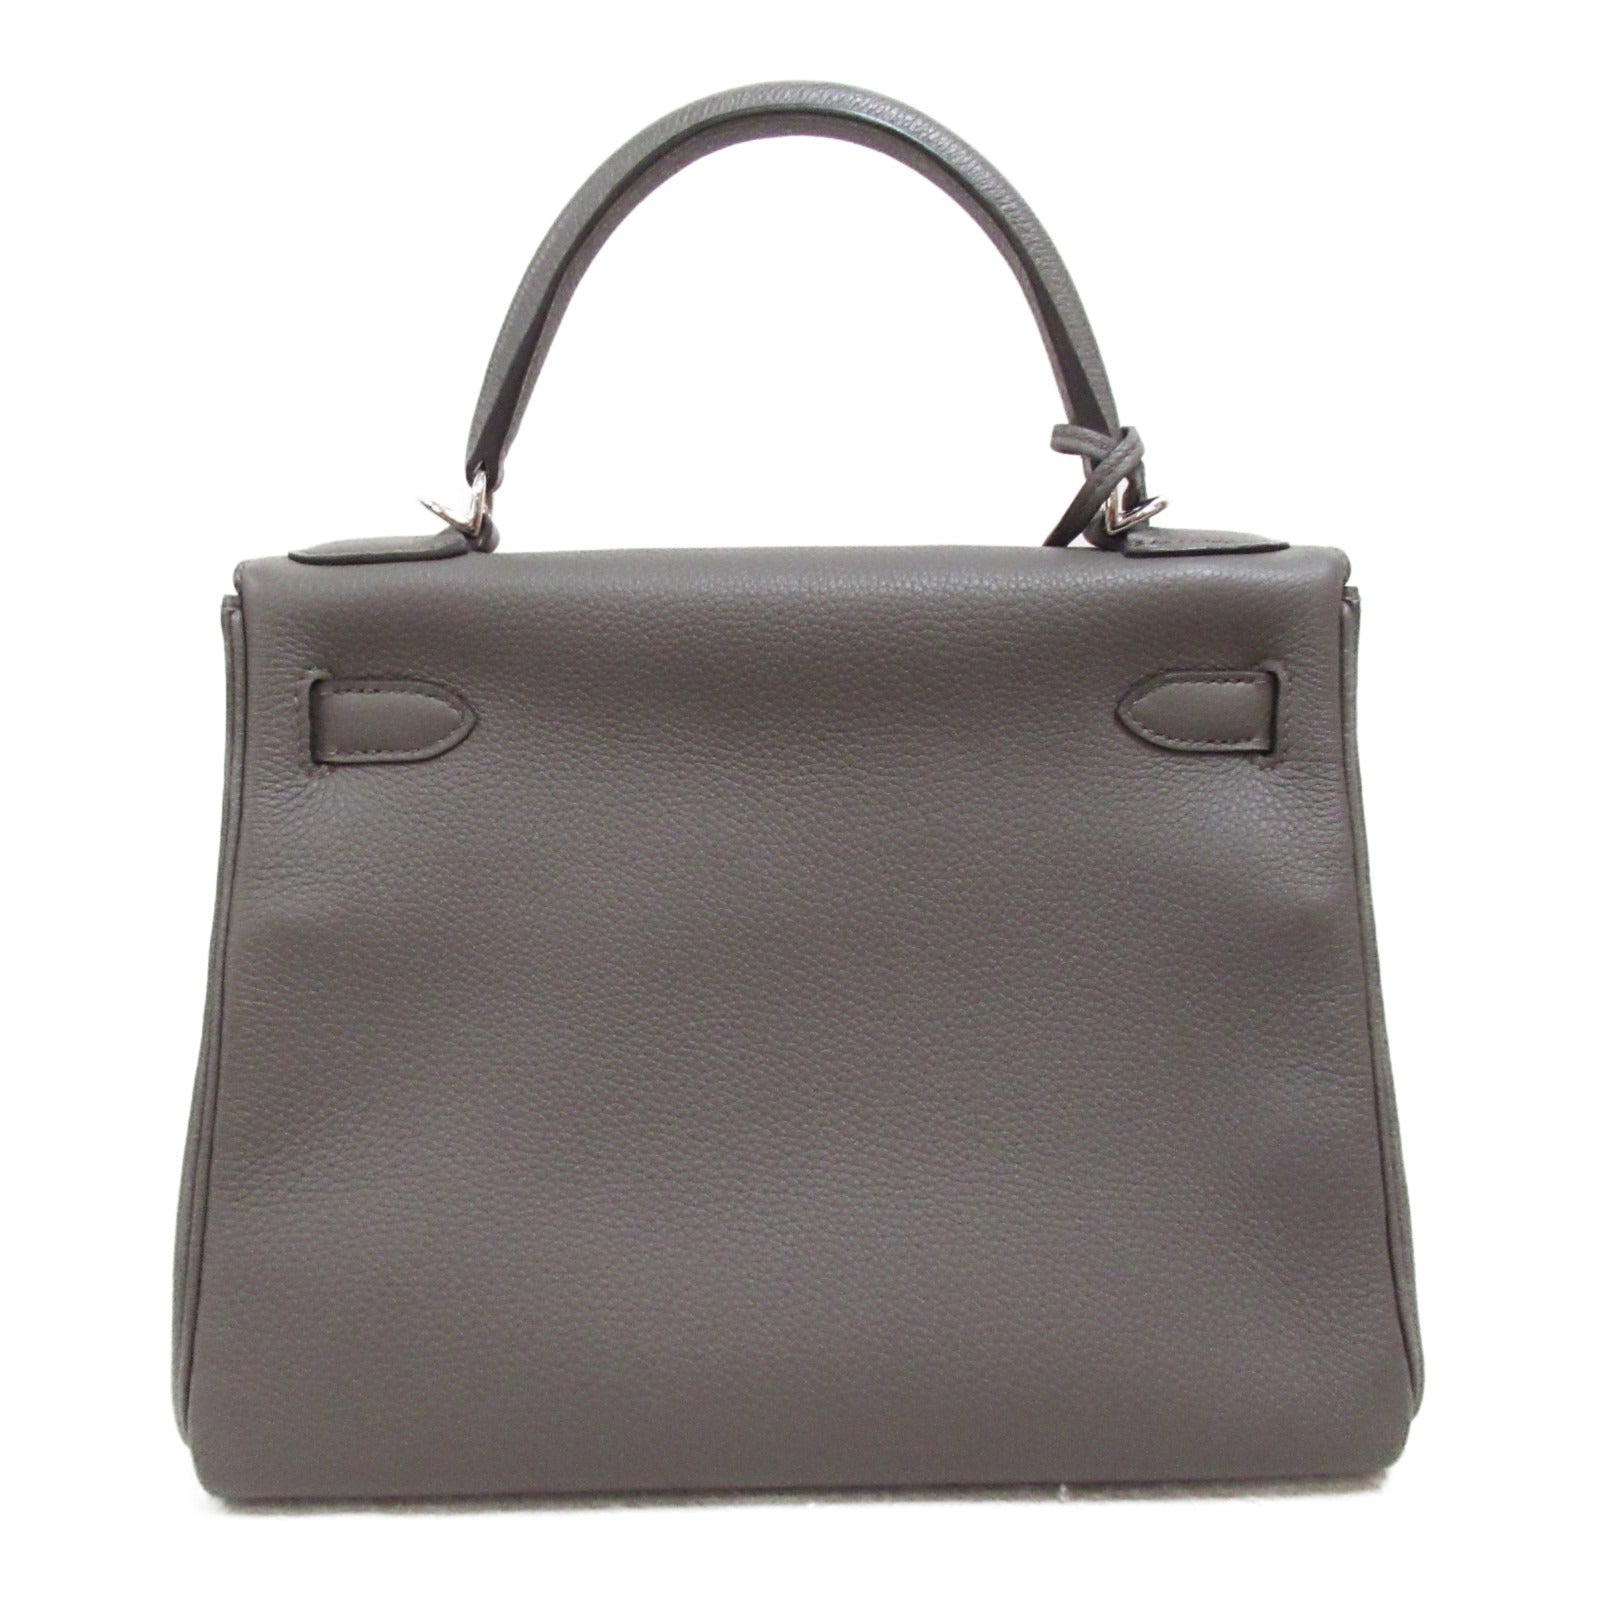 Hermes Kelly 28 Velg Gris In-Shift Handbag Handbag Handbag Leather TOGO LADY GREY